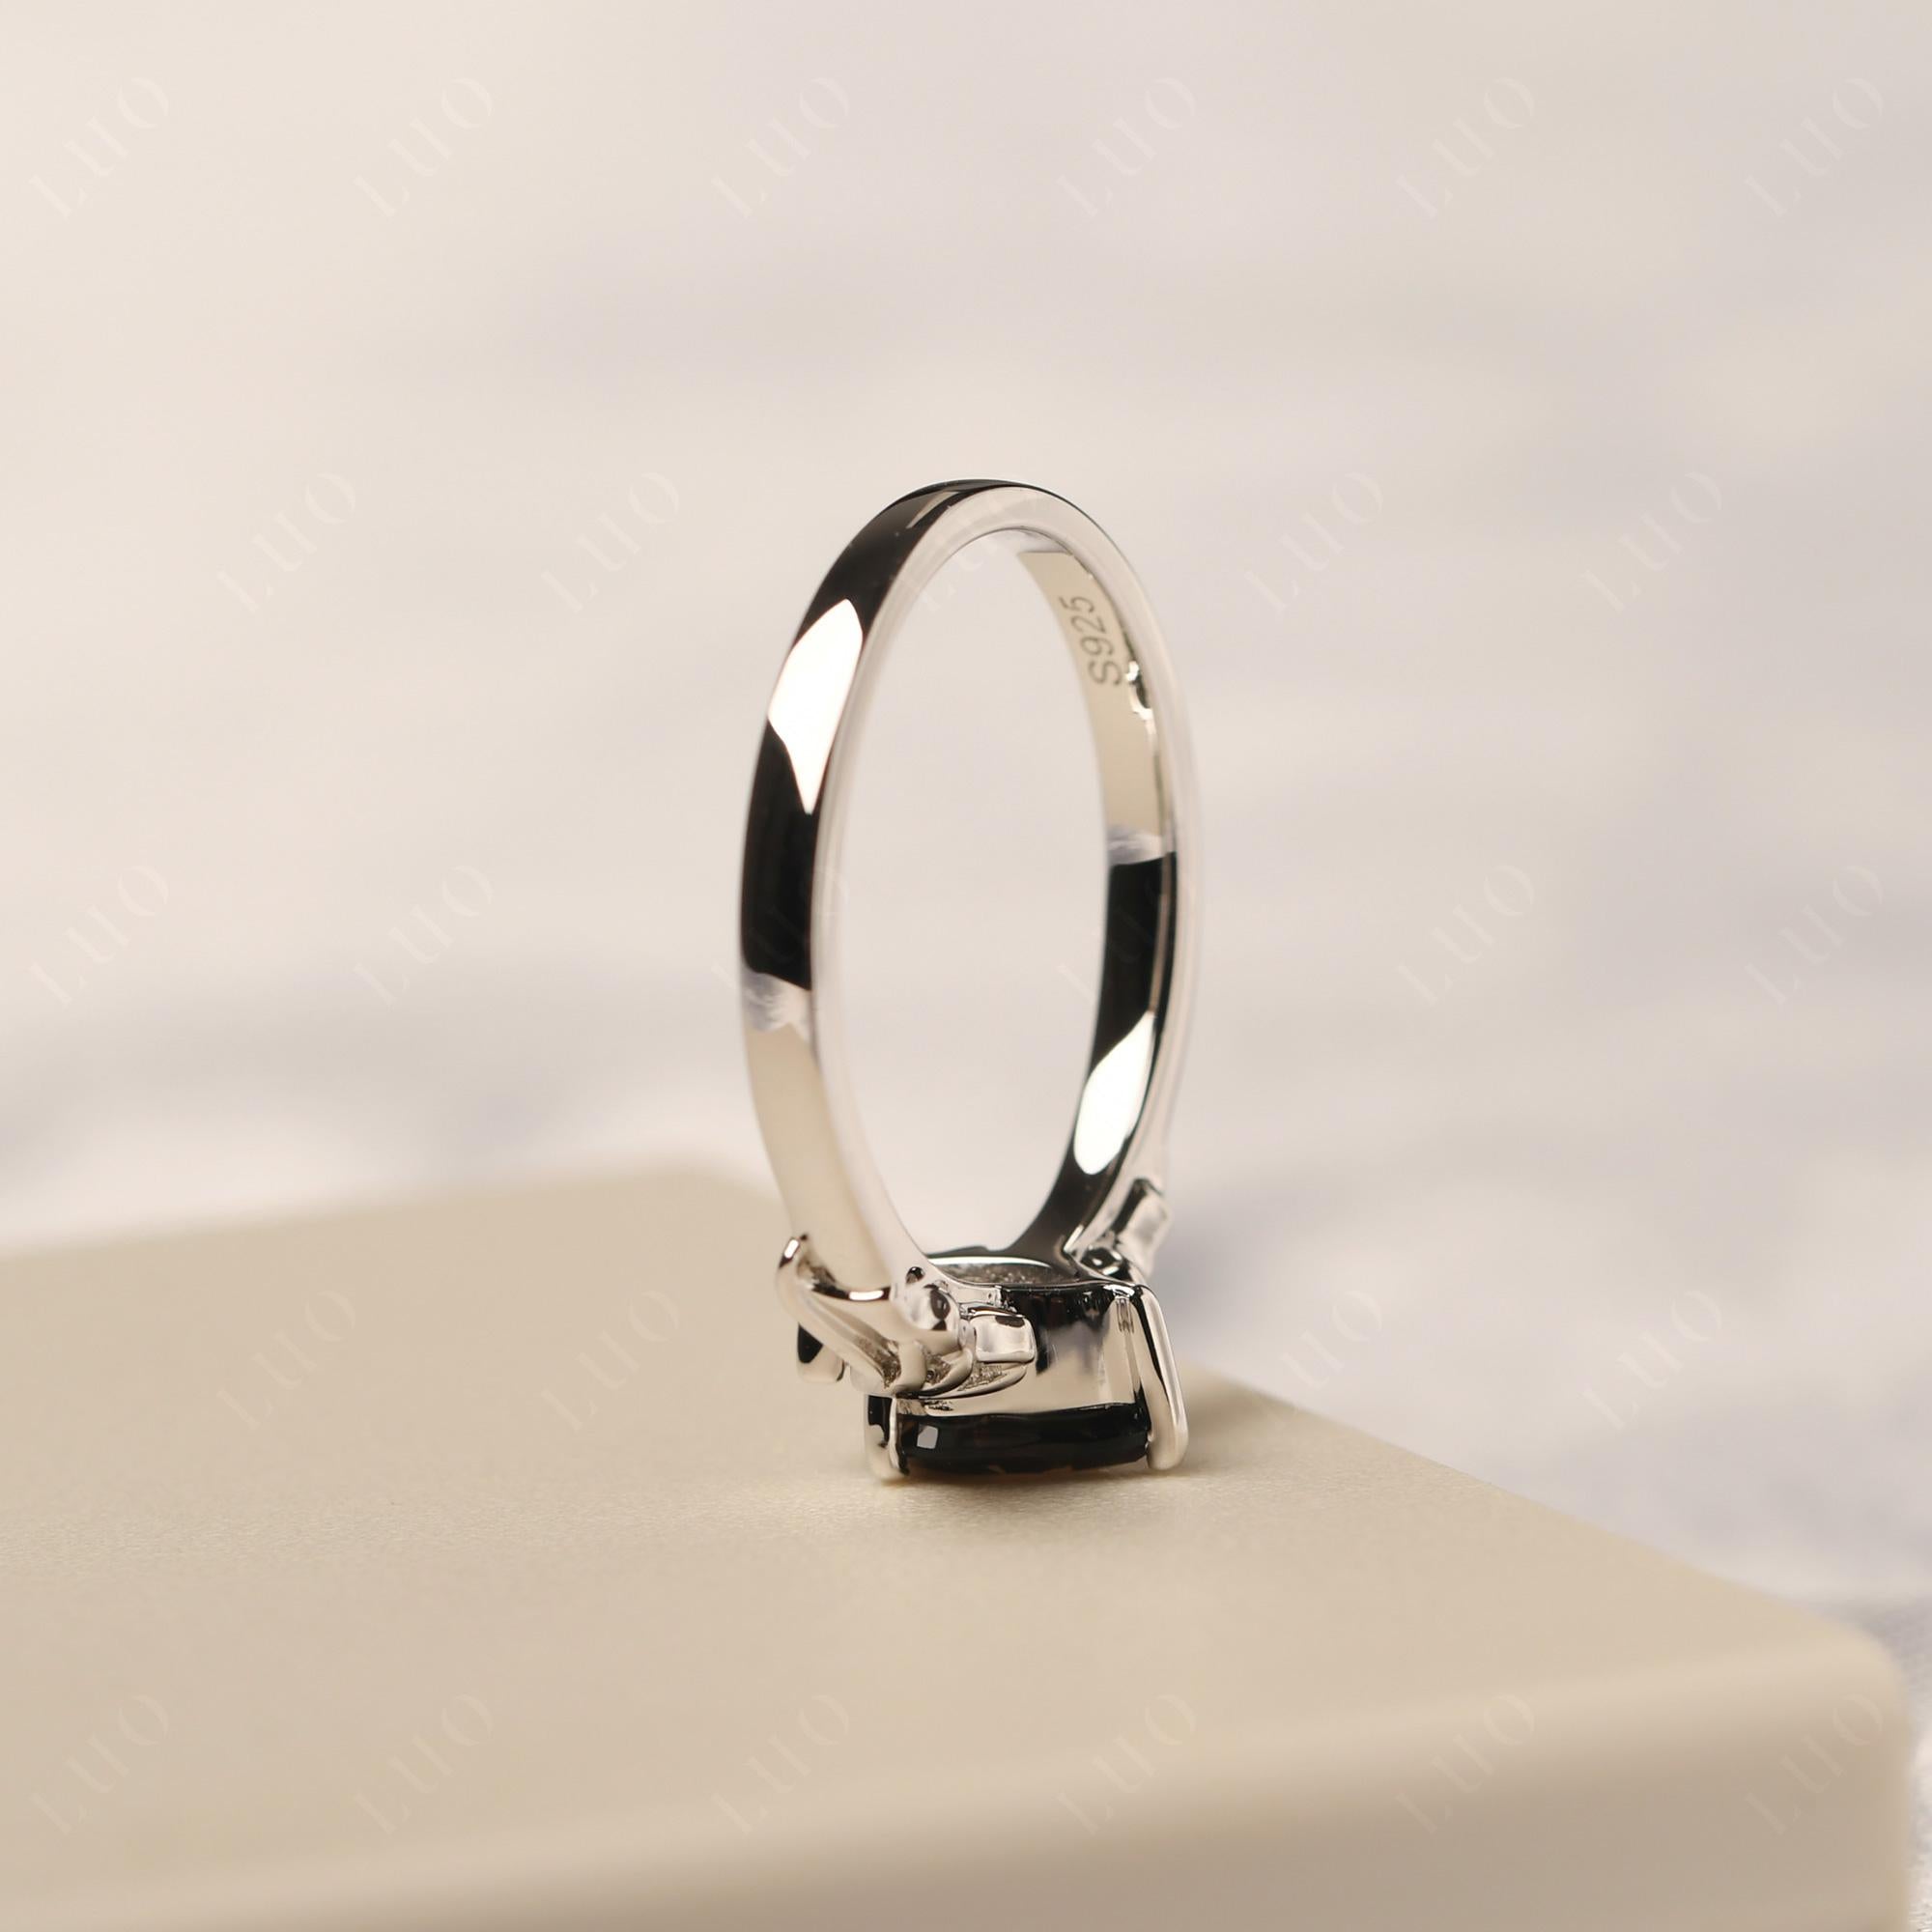 Smoky Quartz Bat Engagement Ring - LUO Jewelry